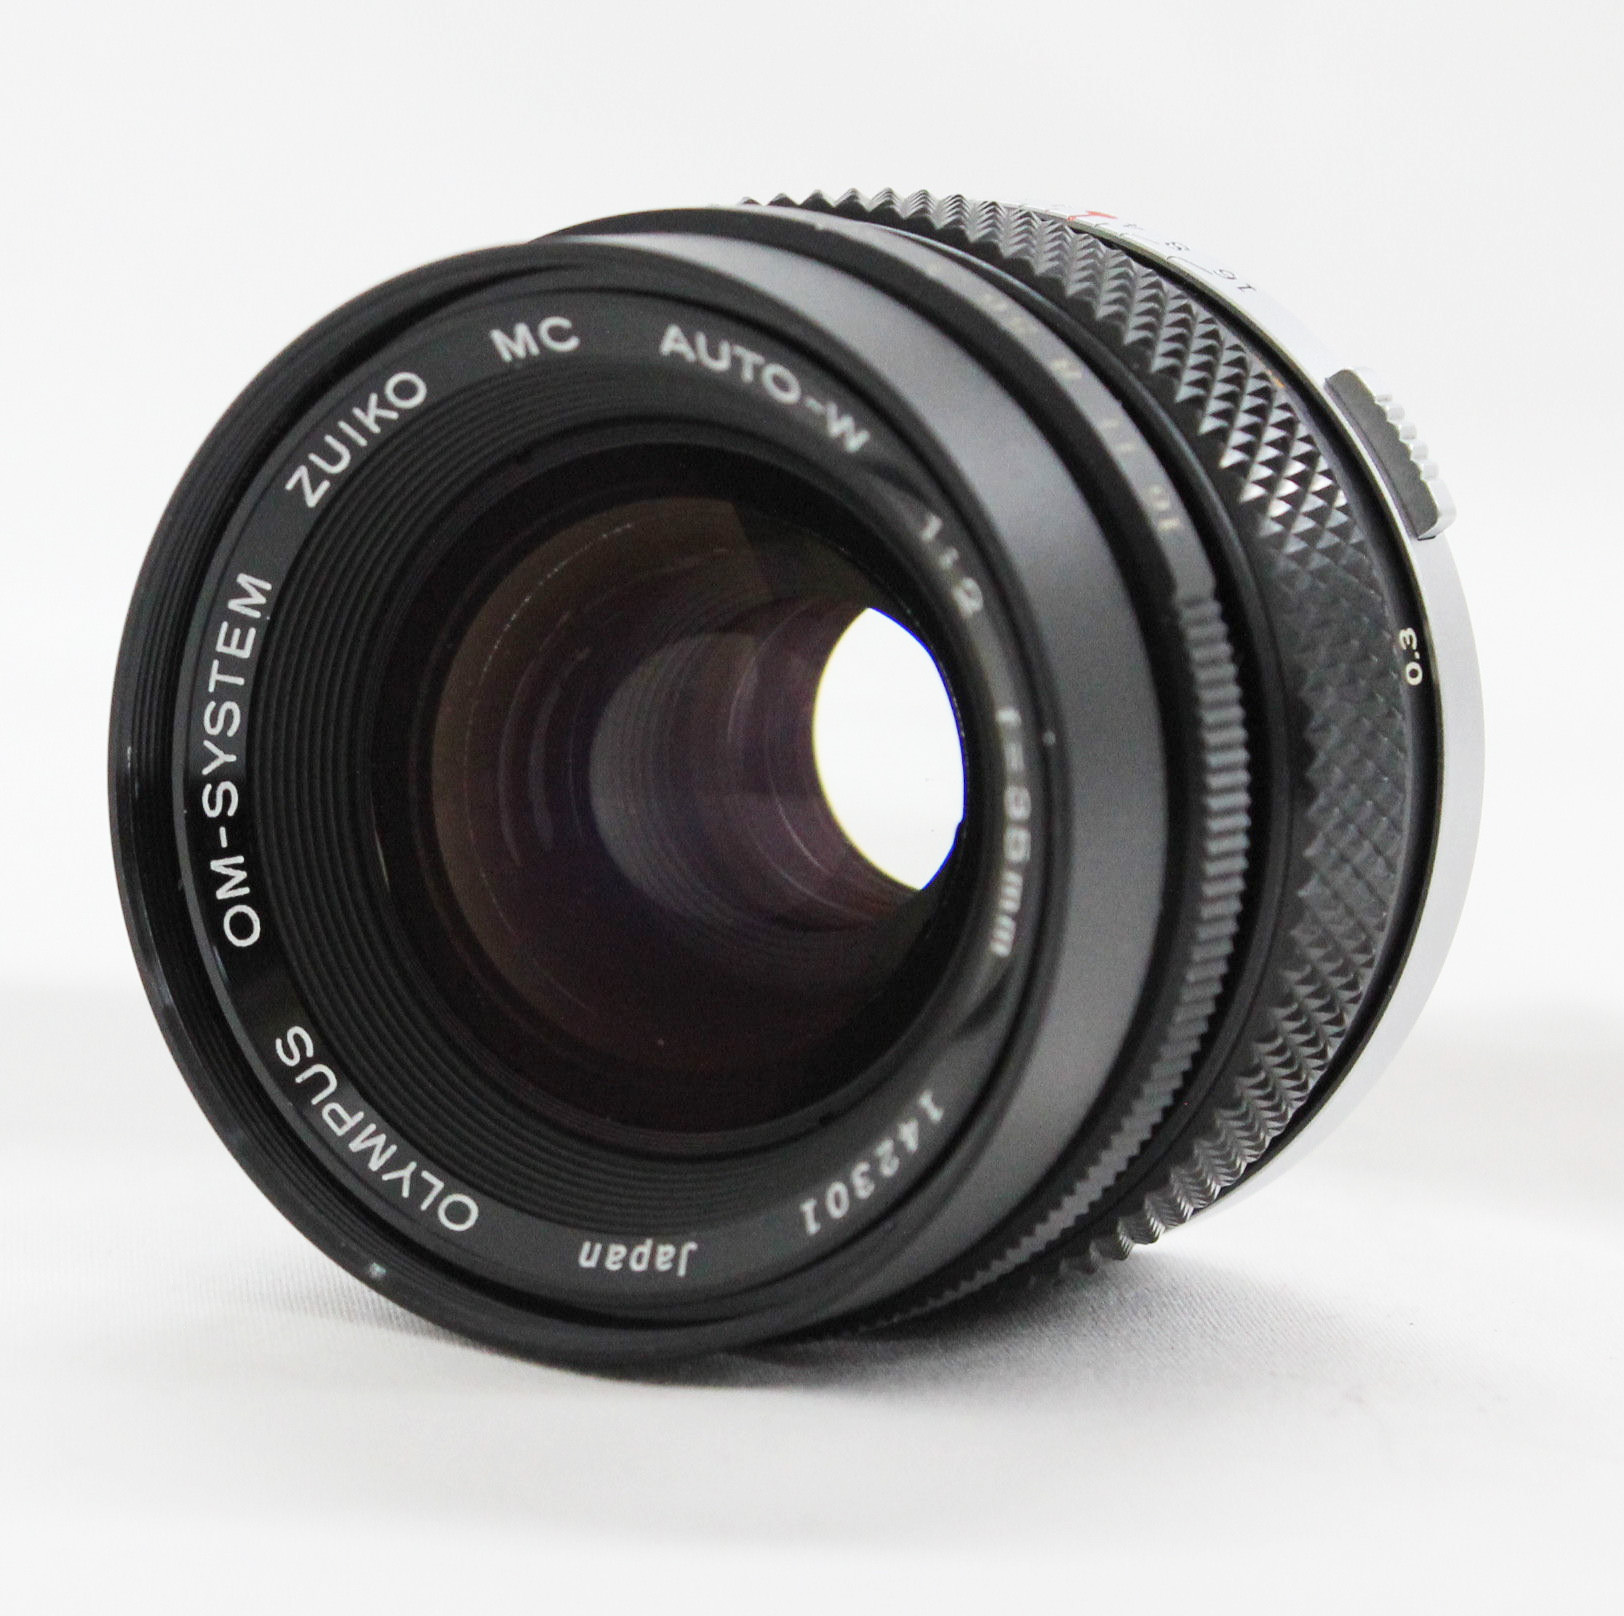 Japan Used Camera Shop | [Near Mint] Olympus OM-System Zuiko MC Auto-W 35mm F/2 MF Lens from Japan